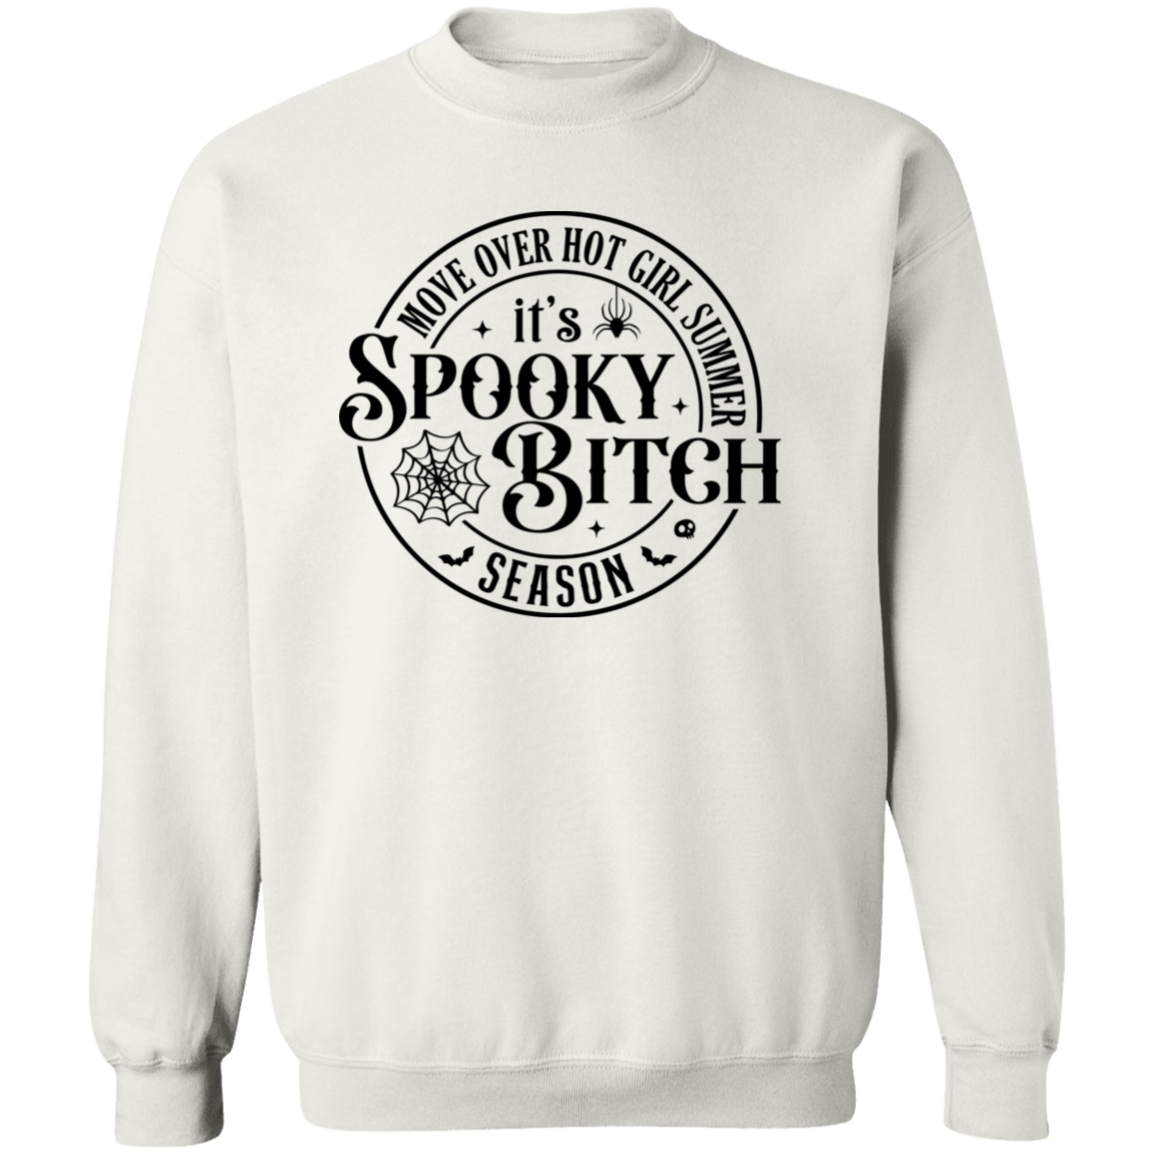 Spooky B*tch Season Shirt